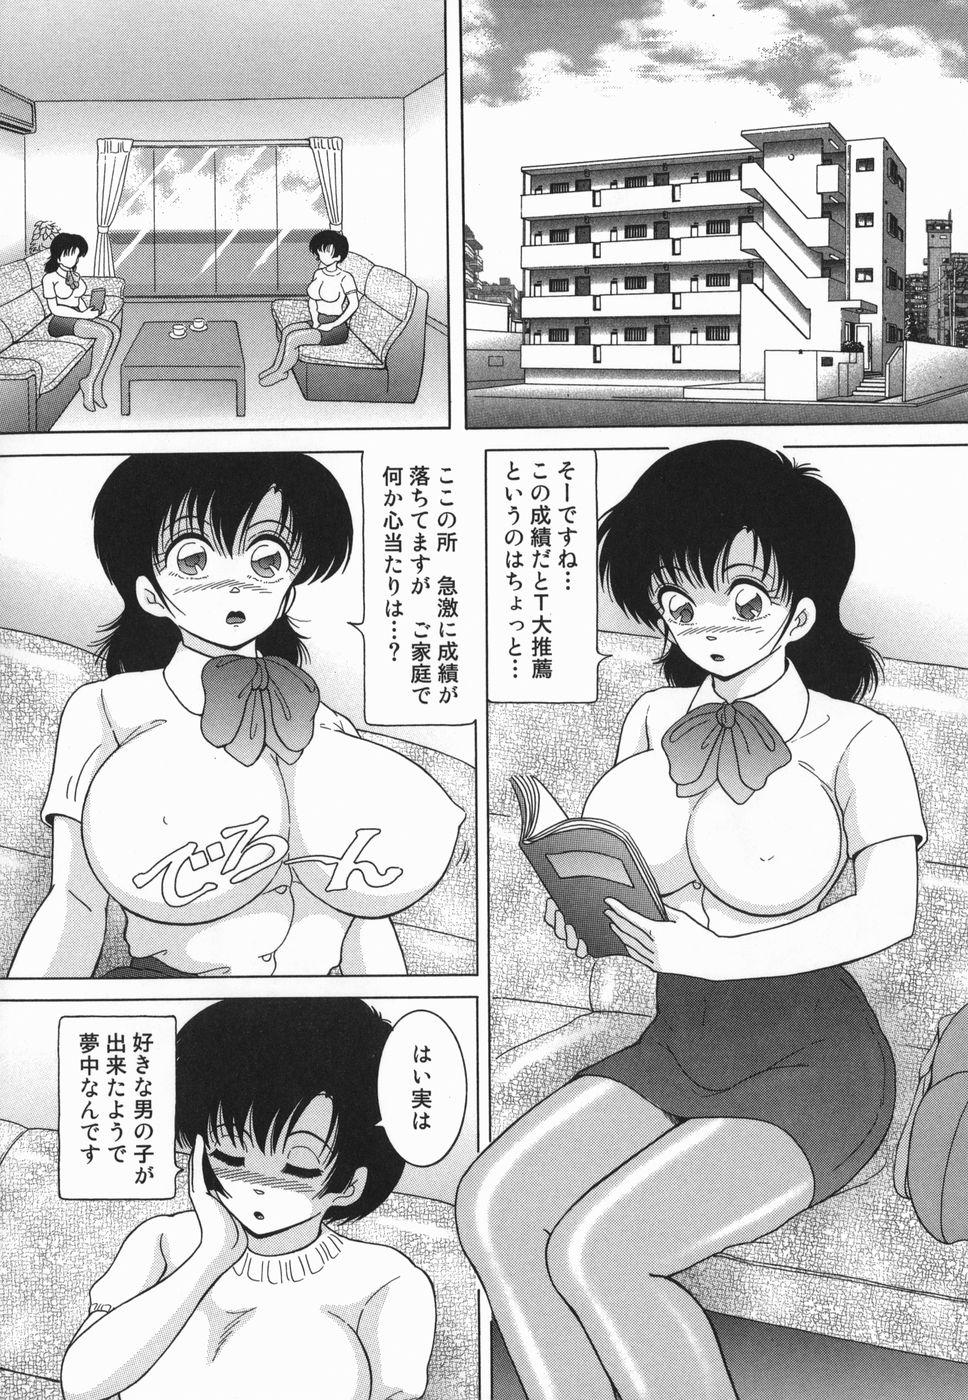 Jogakusei Maetsu no Kyoukasho - The Schoolgirl With Shameful Textbook. 137